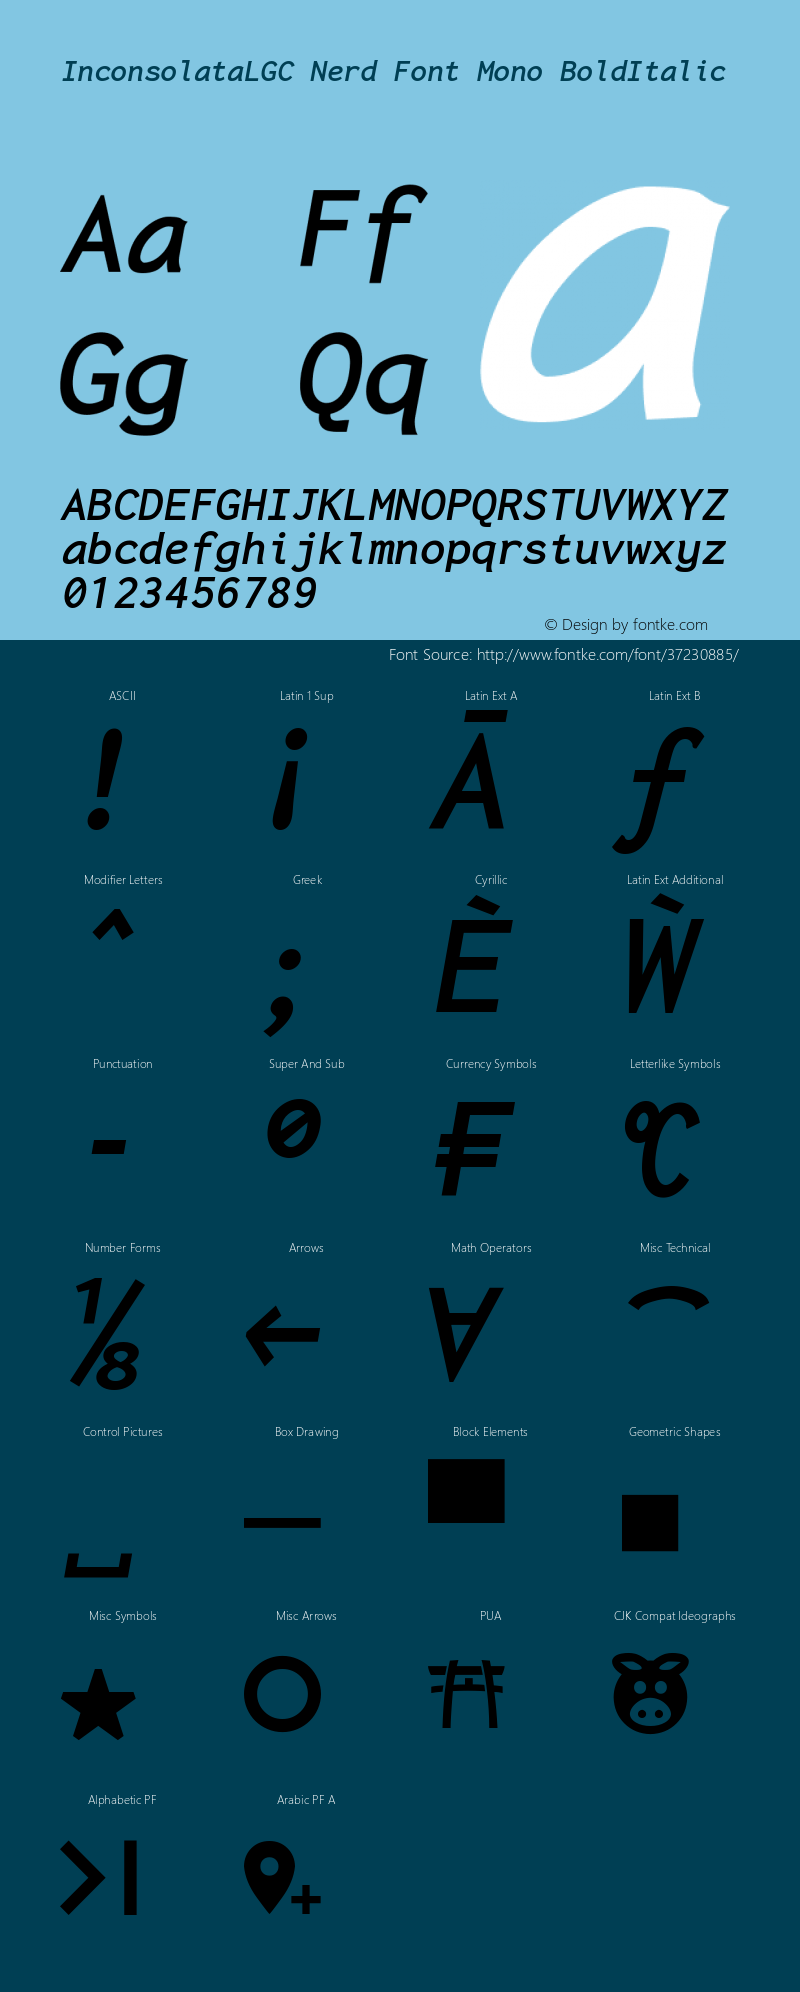 Inconsolata LGC Bold Italic Nerd Font Complete Mono Version 1.3;Nerd Fonts 2.0.0 Font Sample